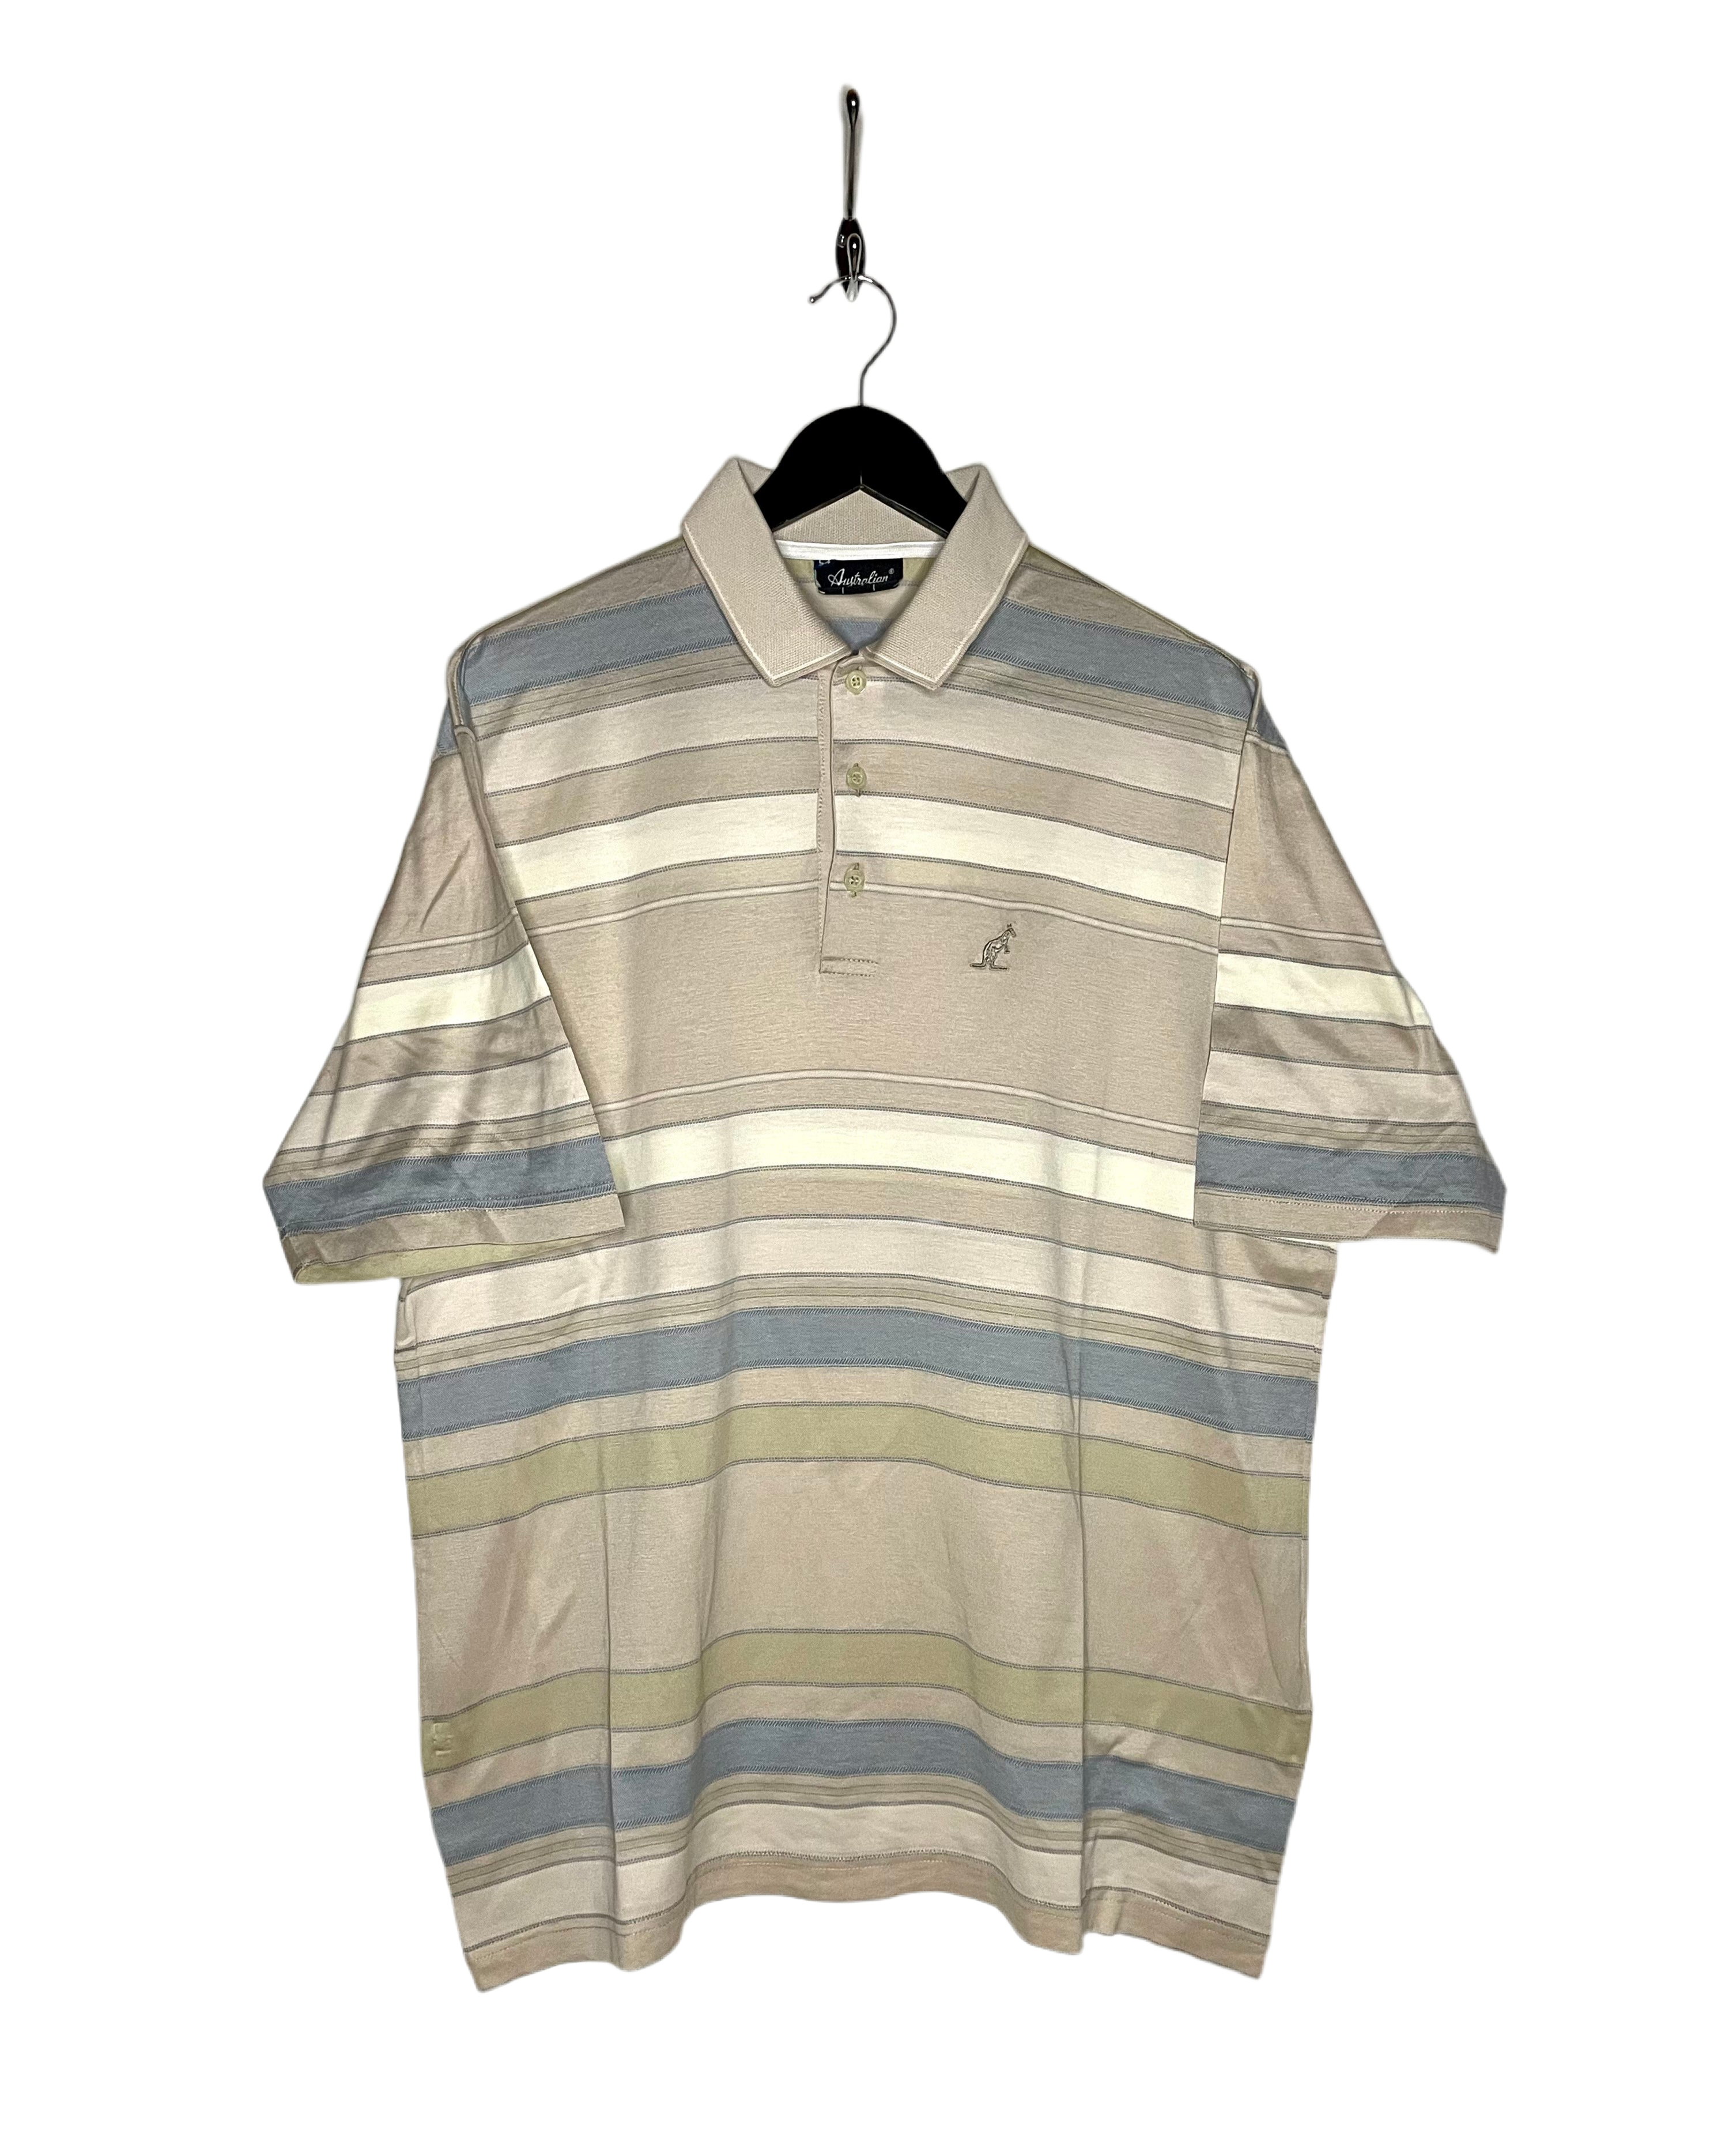 Australian Vintage Polo Shirt Beige/Blue Stripes Size XL 